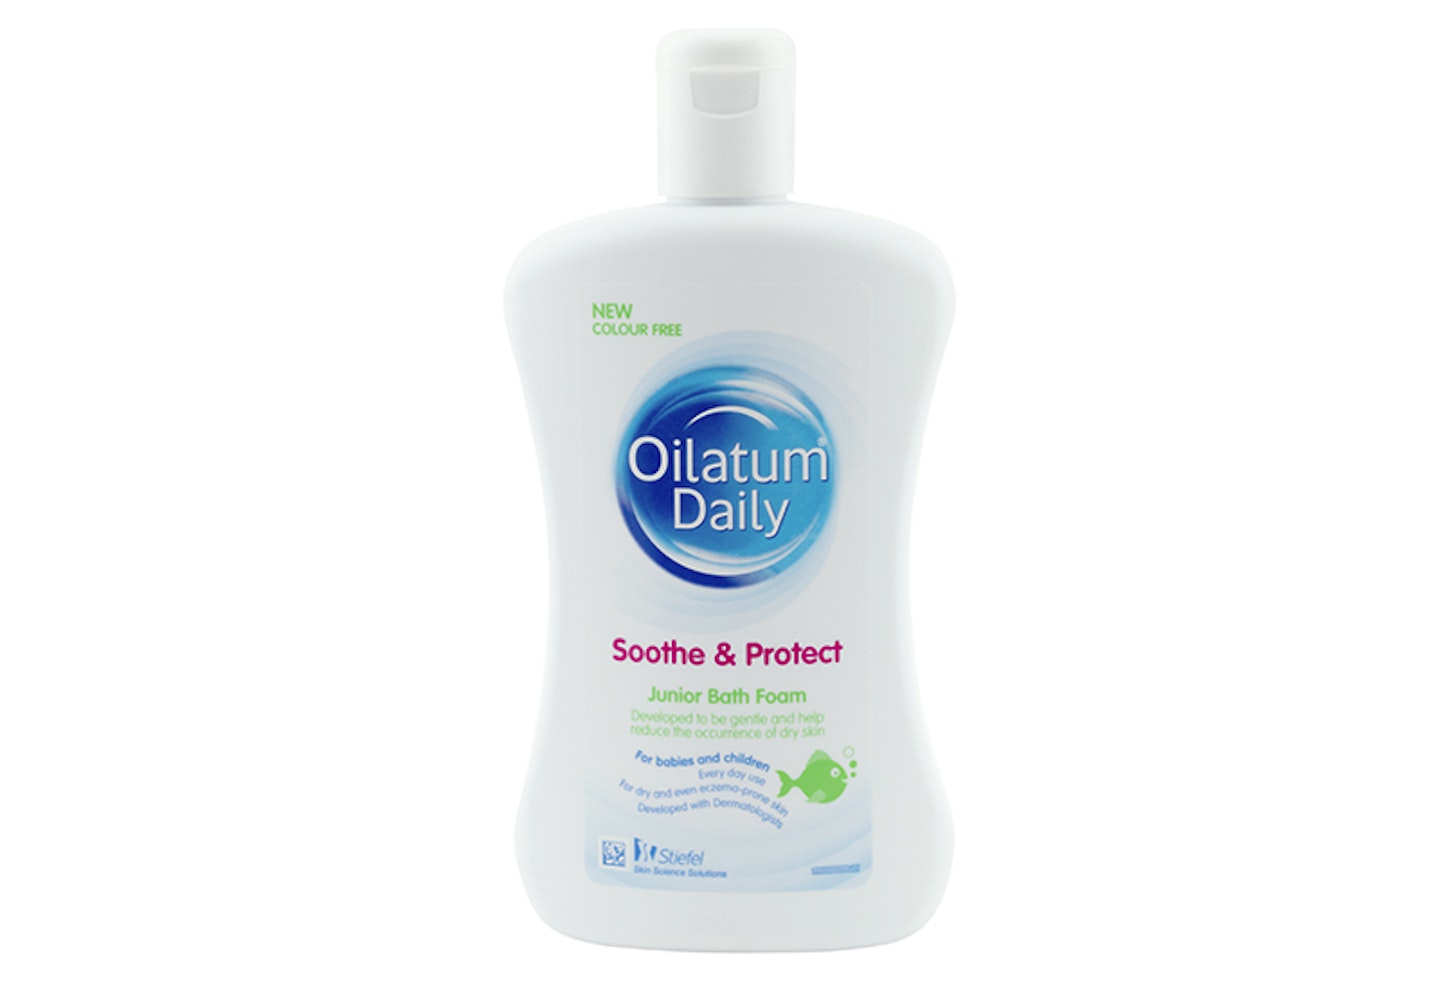 Oilatum Daily Junior Bath Foam